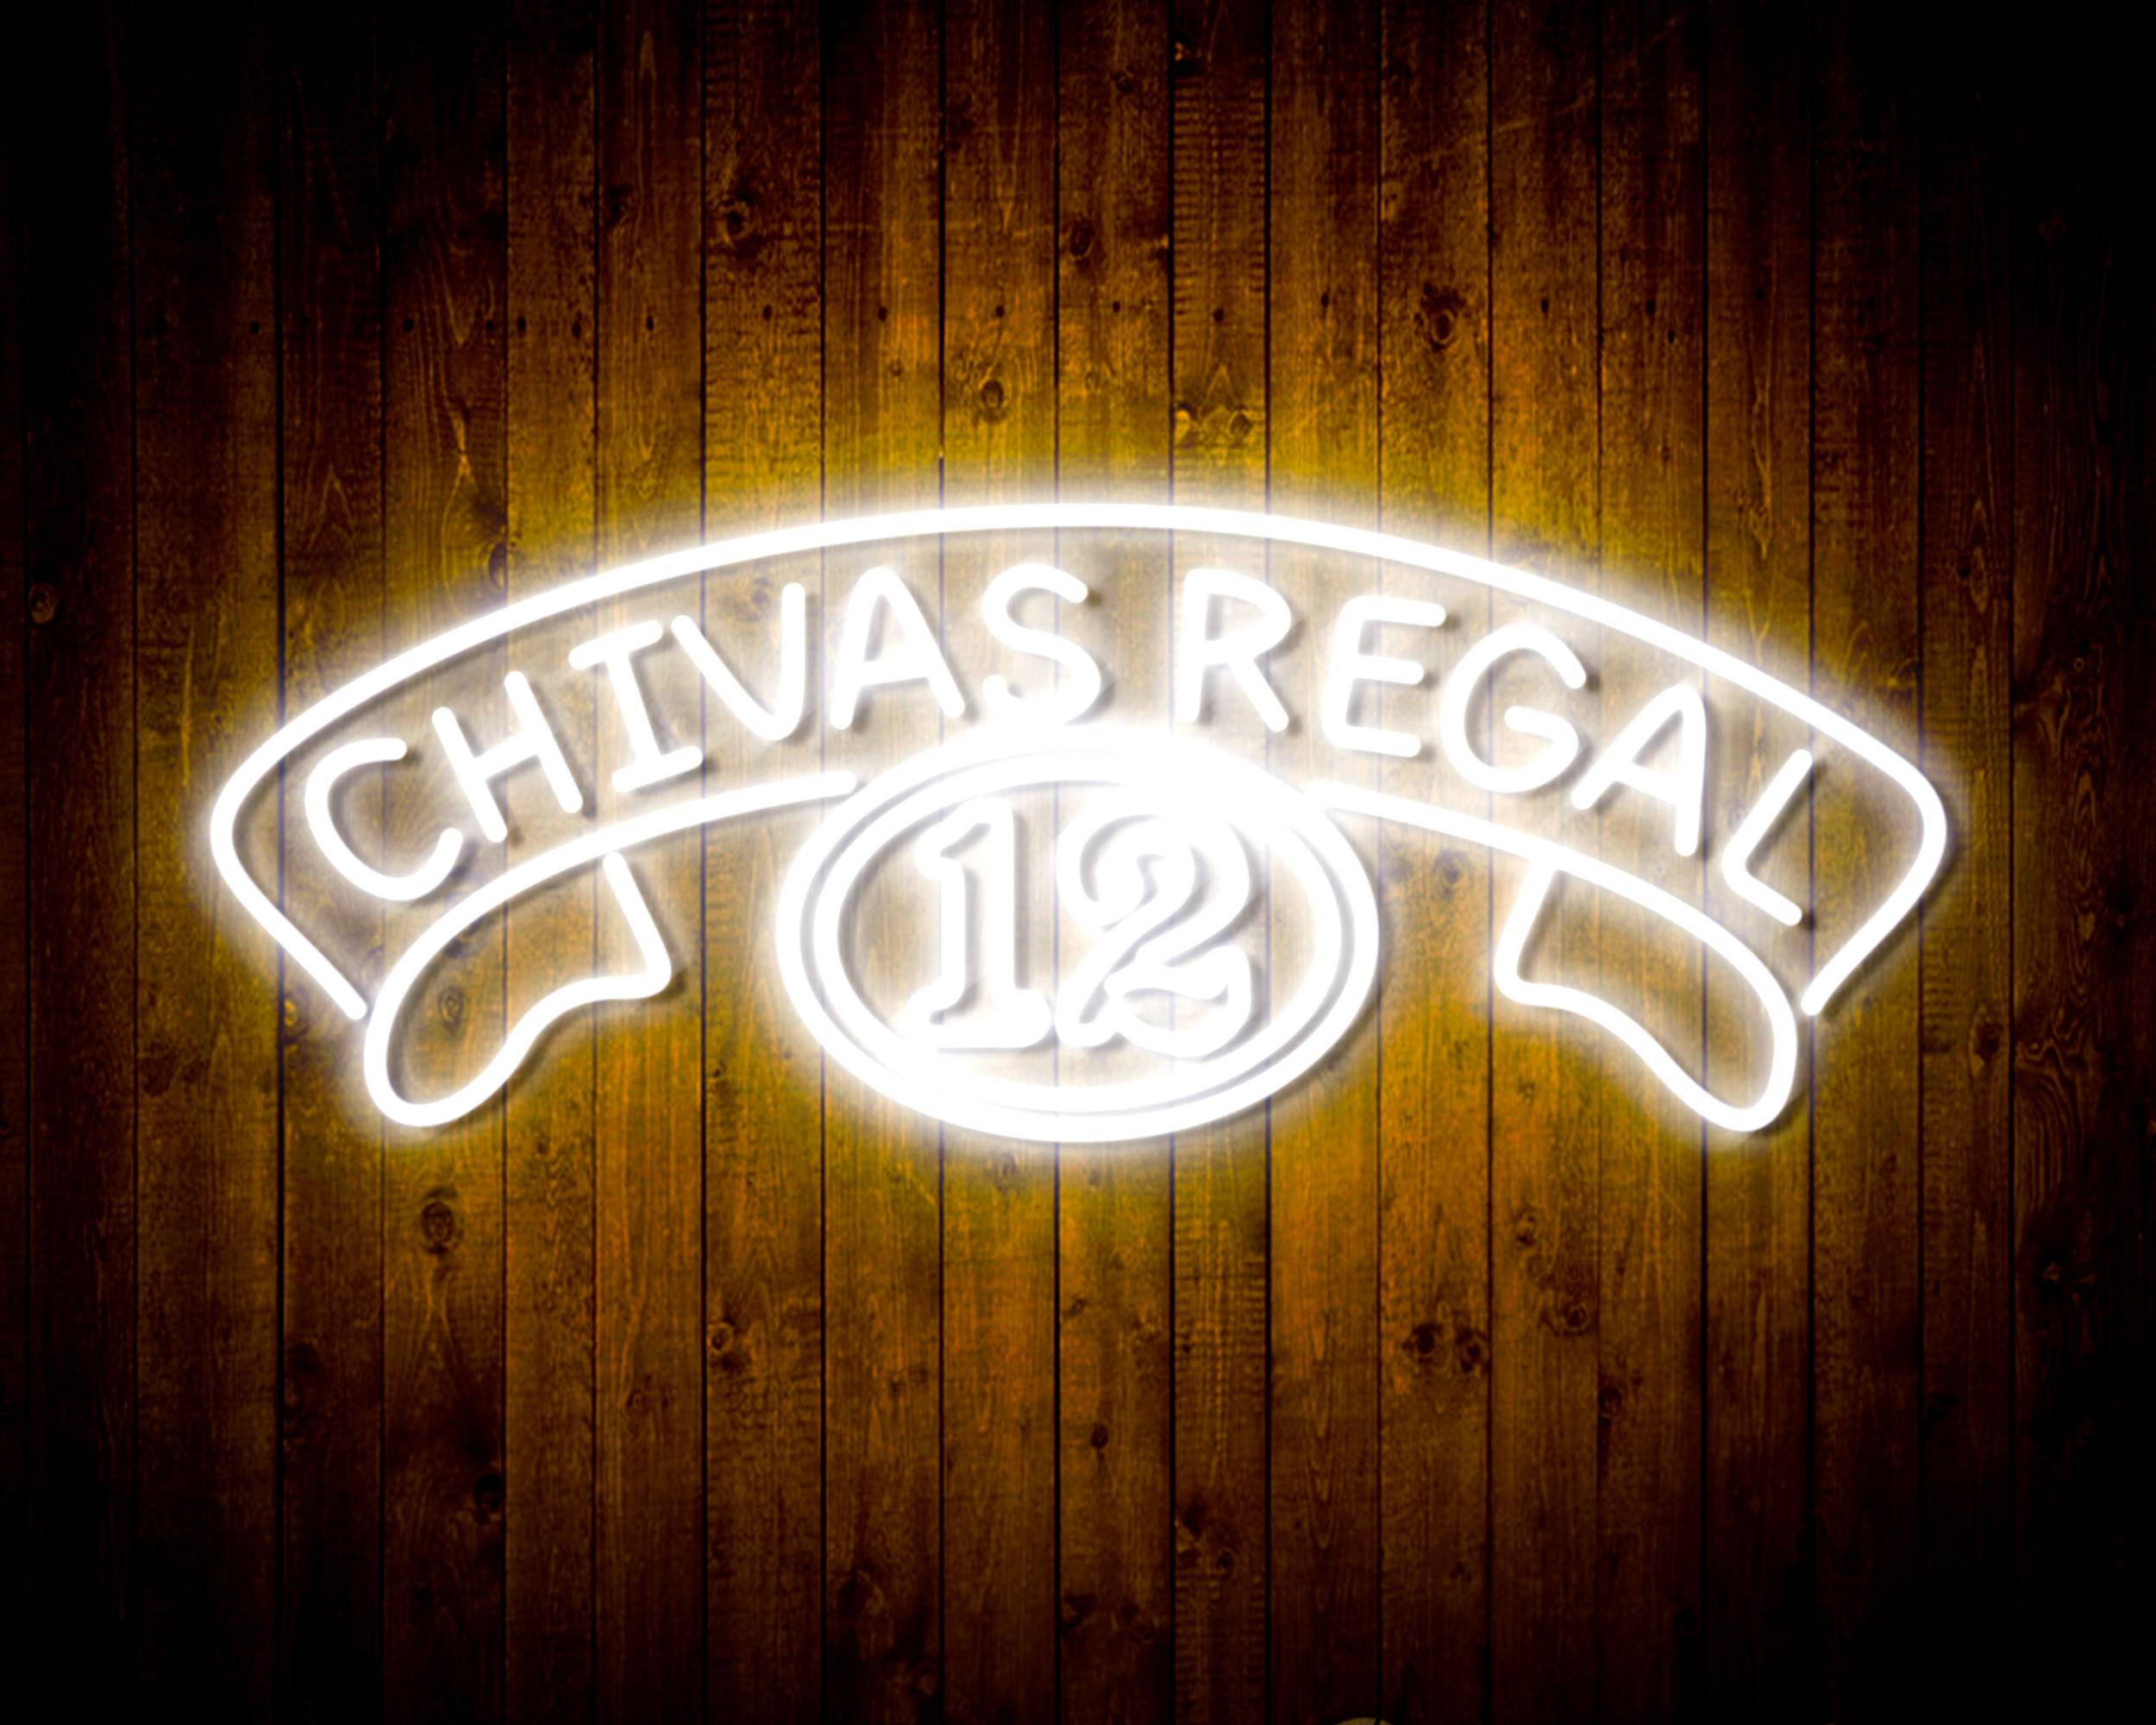 Chivas Regal 12 Handmade Neon Flex LED Sign